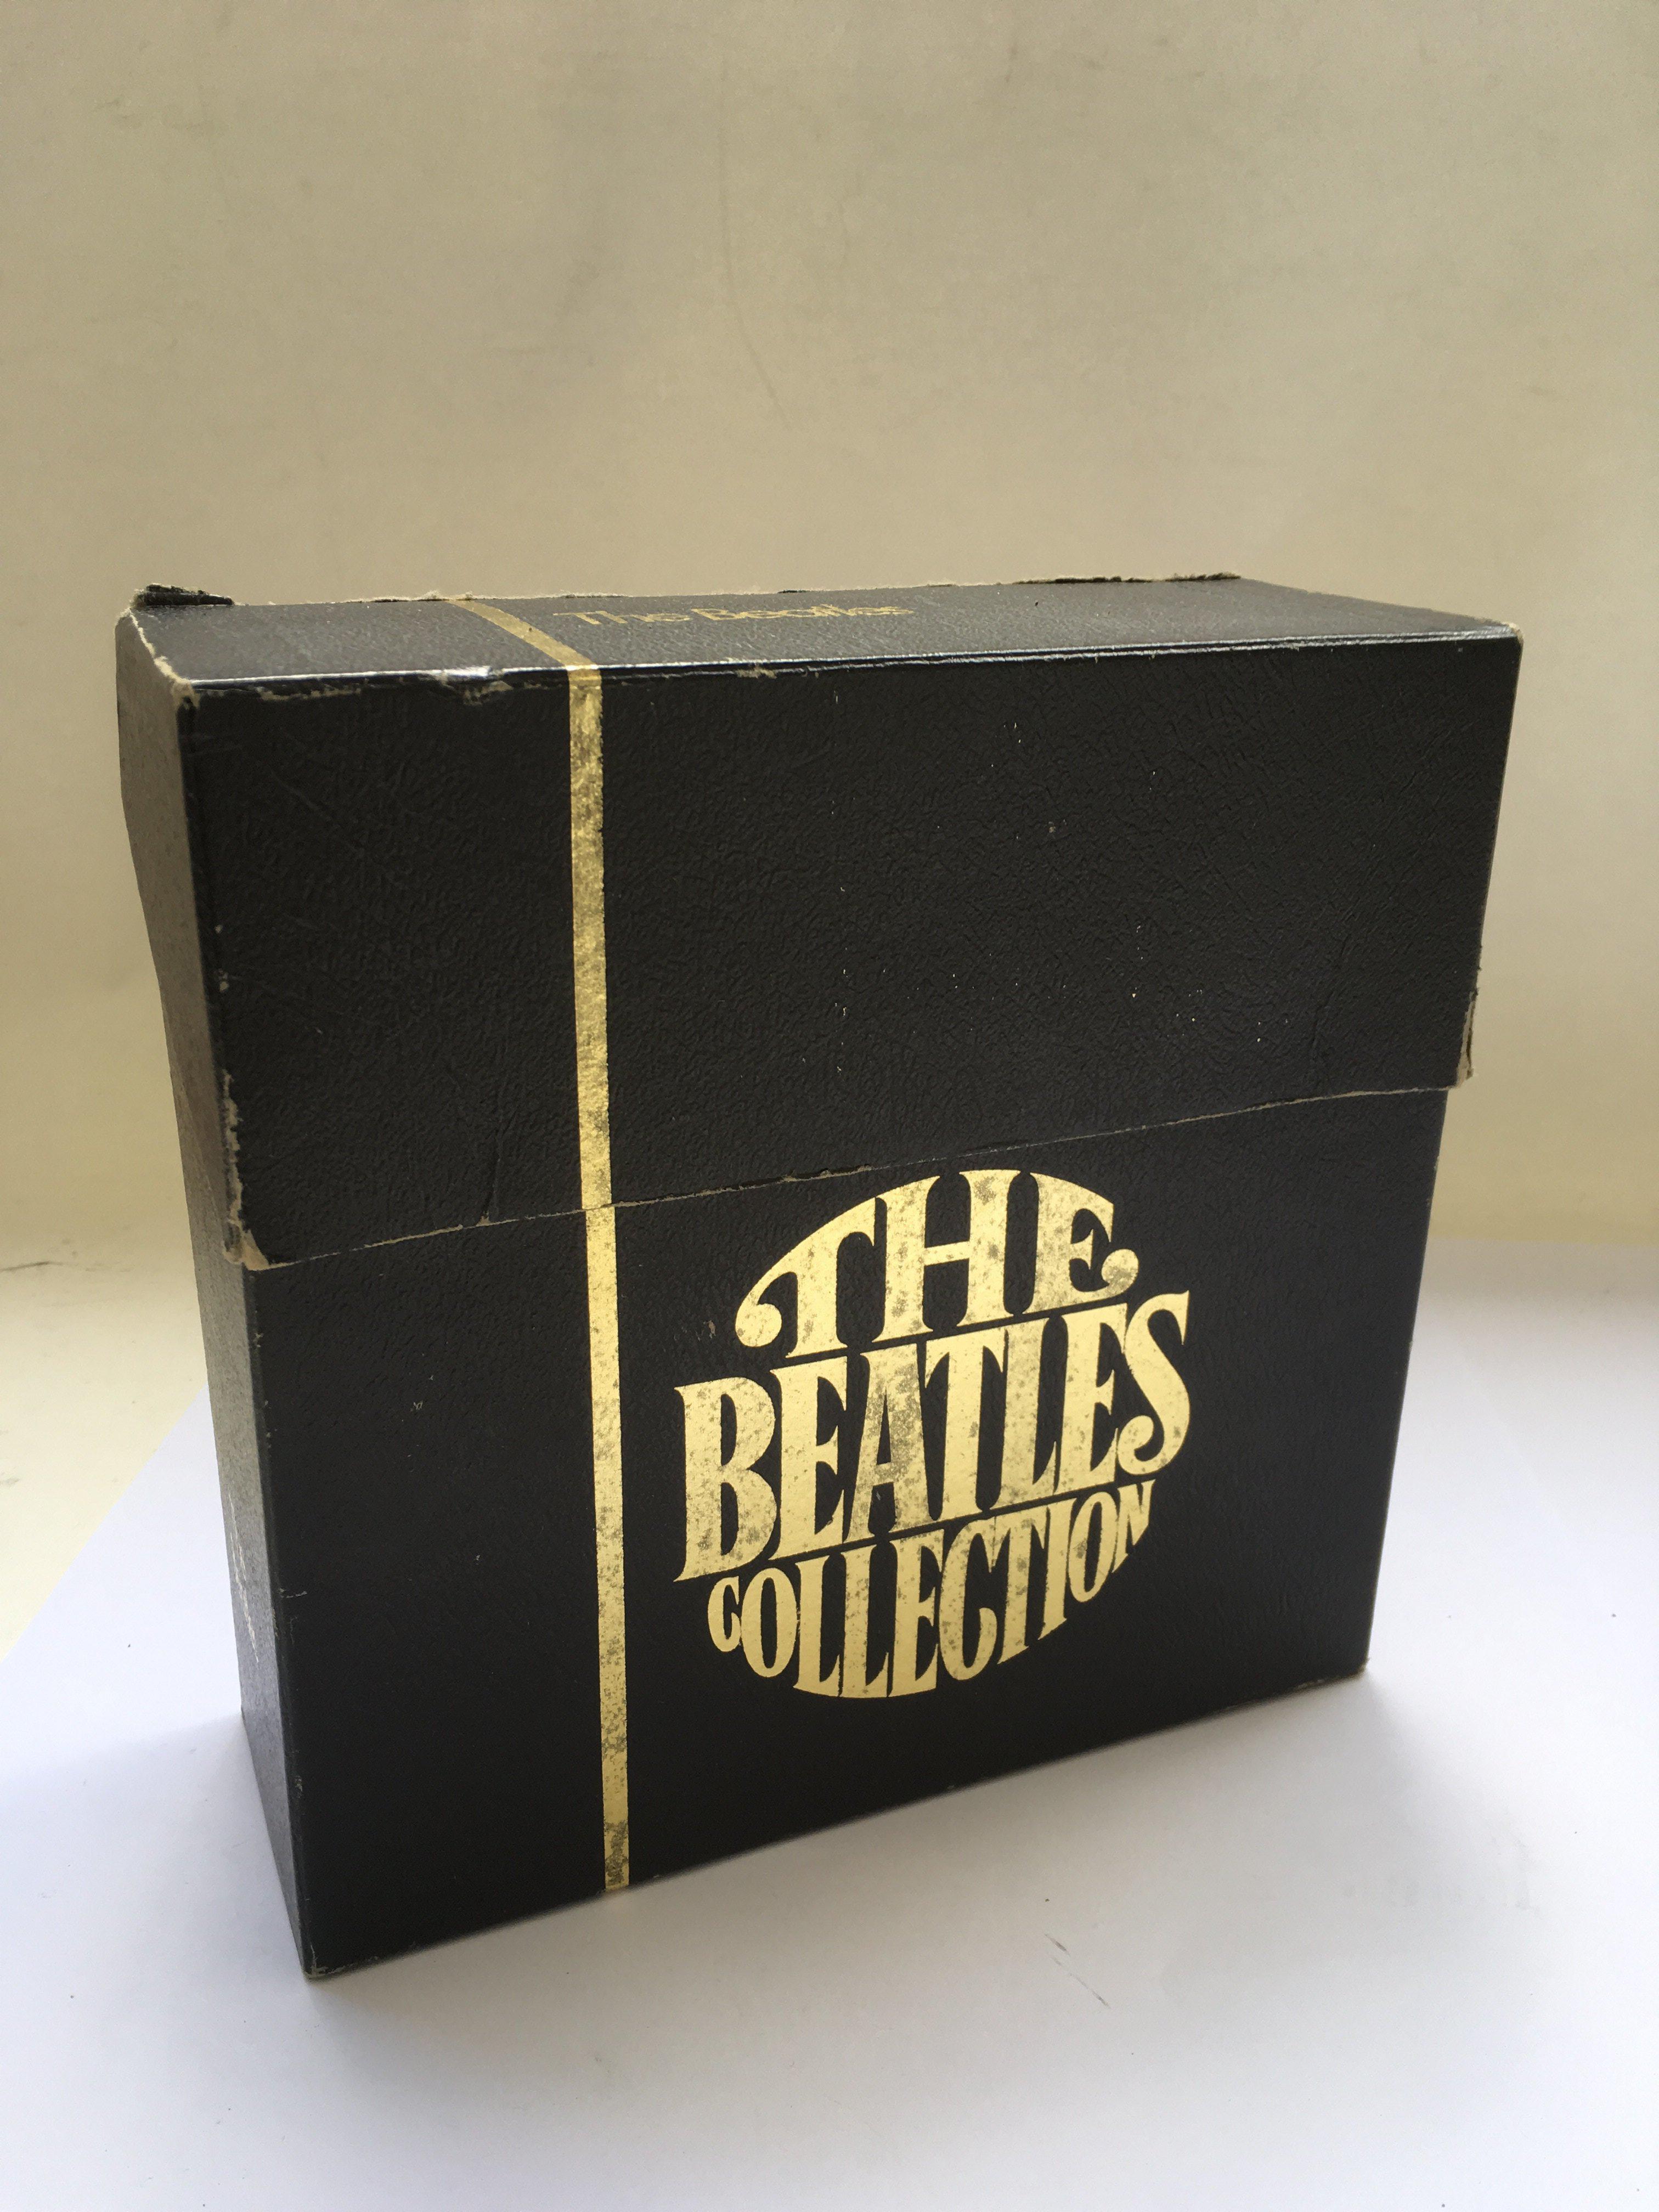 A Beatles singles collection box set.